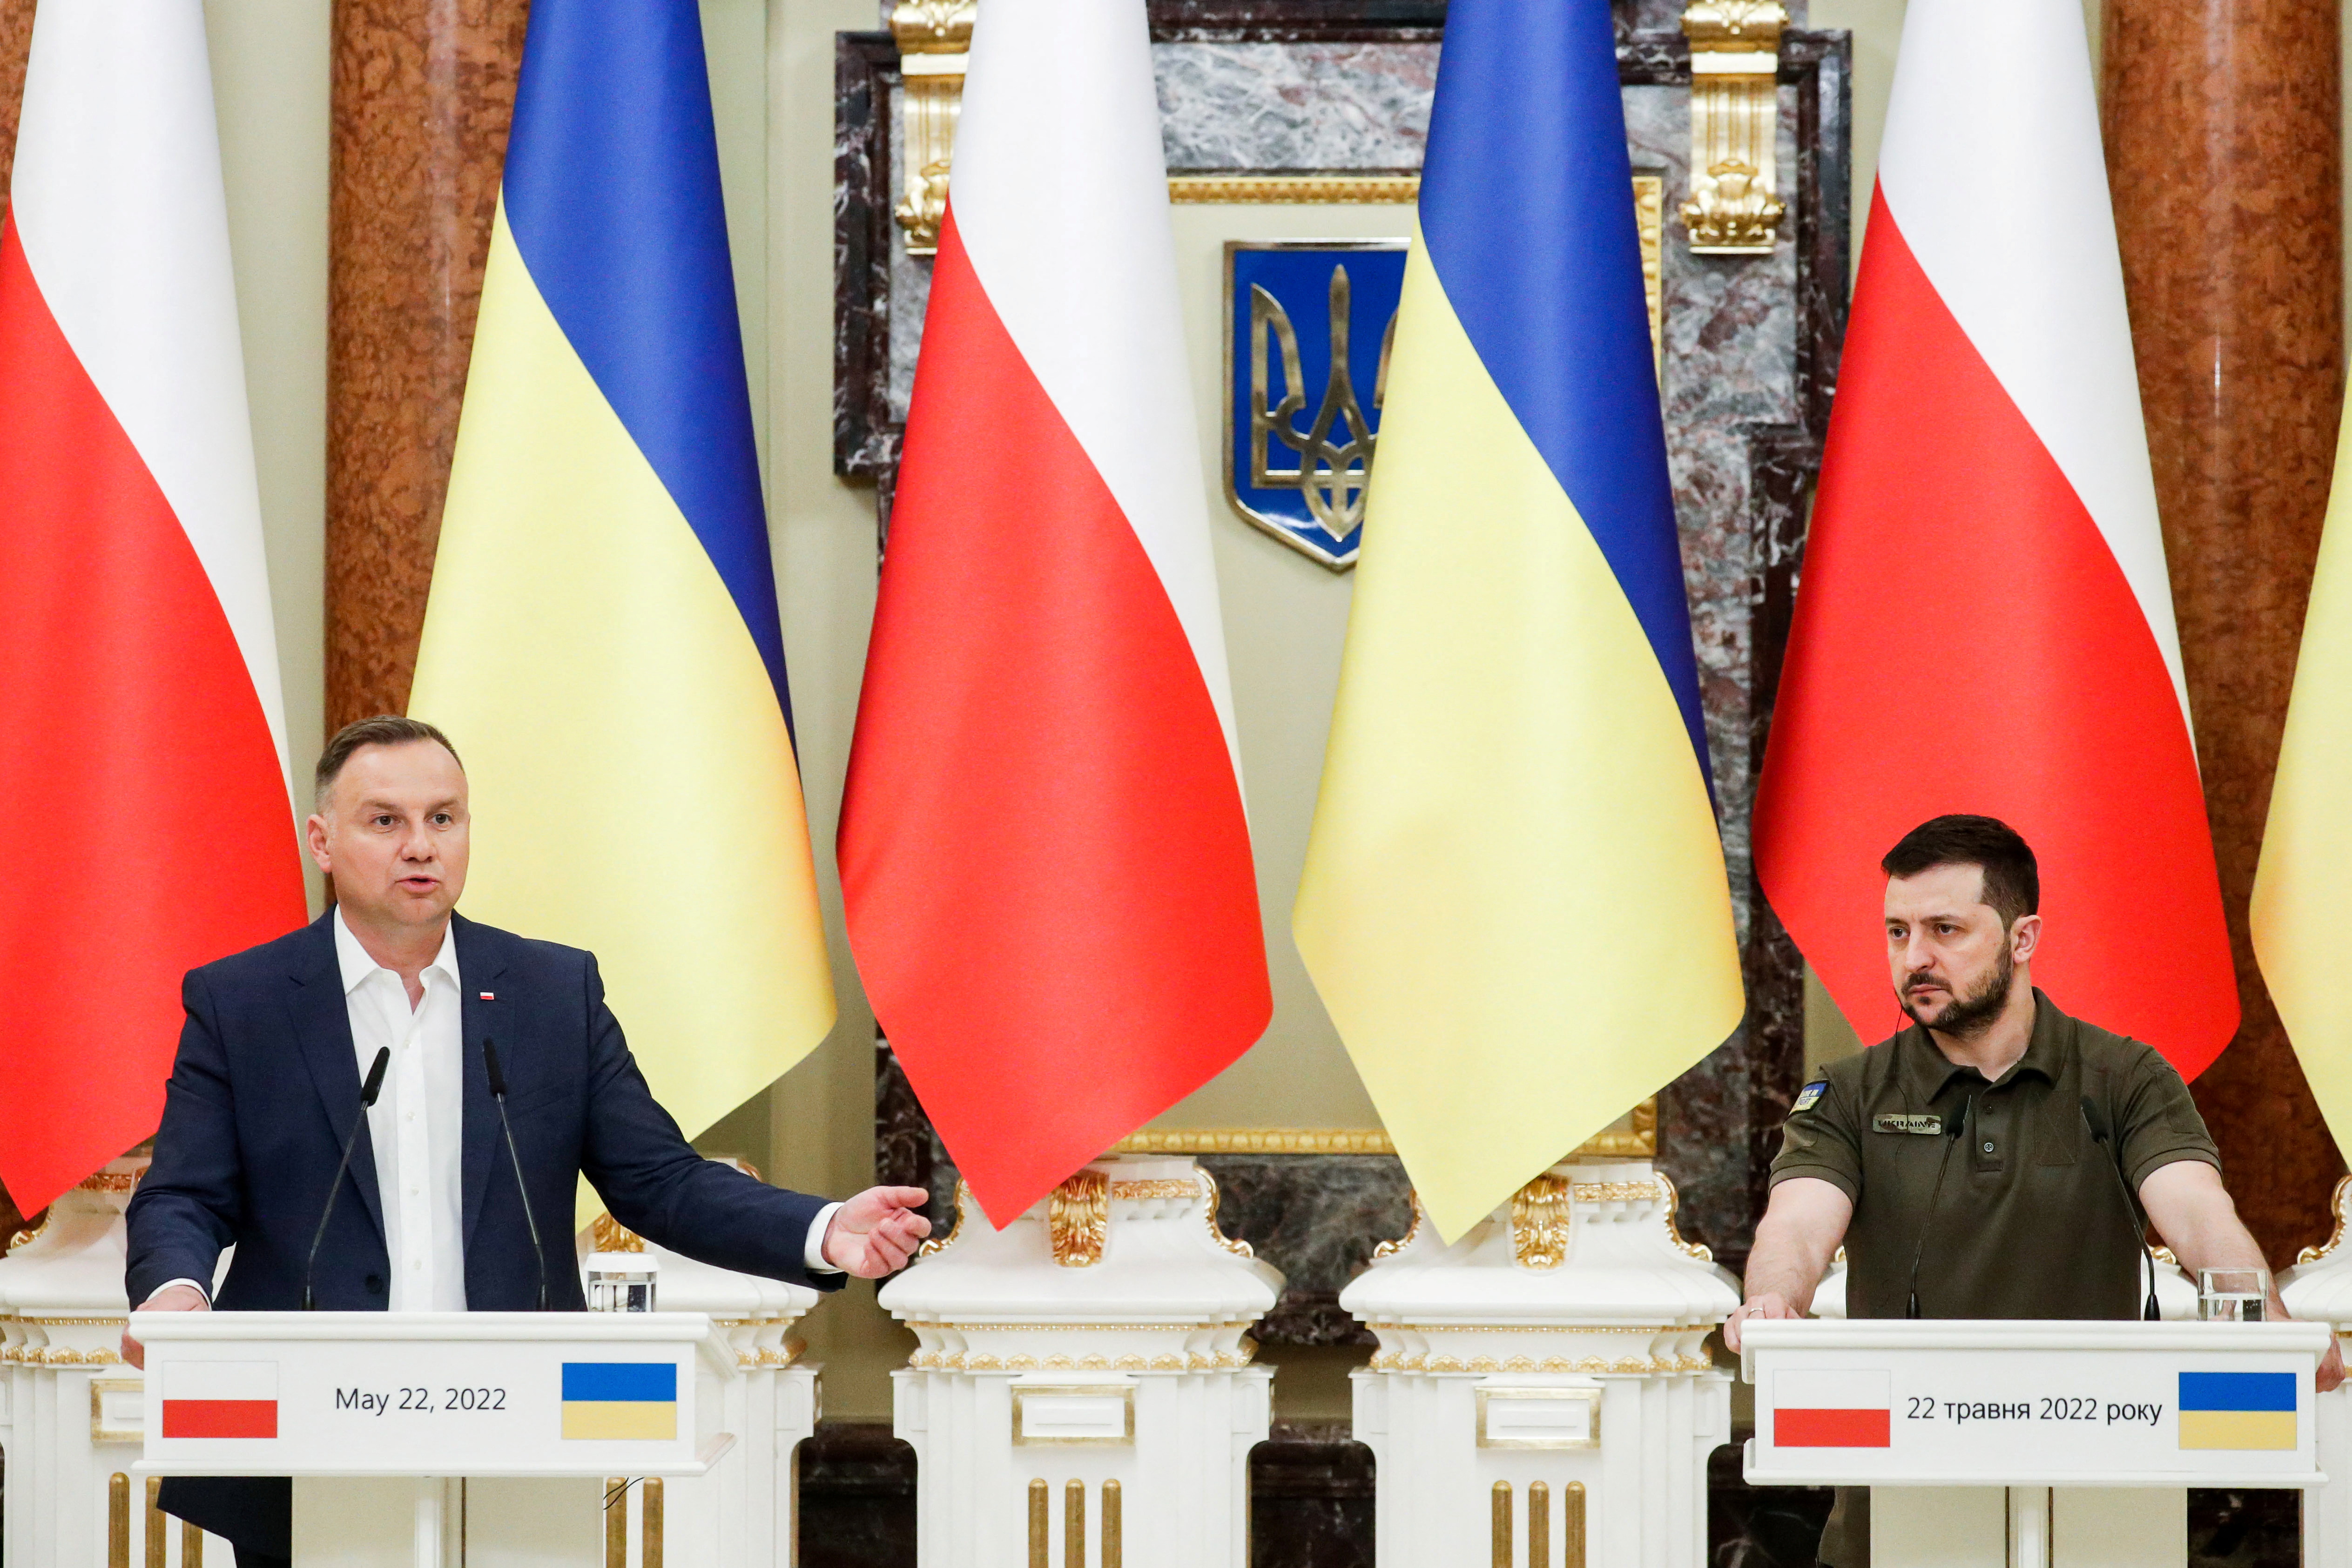 Poland's President Duda and Ukraine's President Zelenskiy hold a news conference in Kyiv